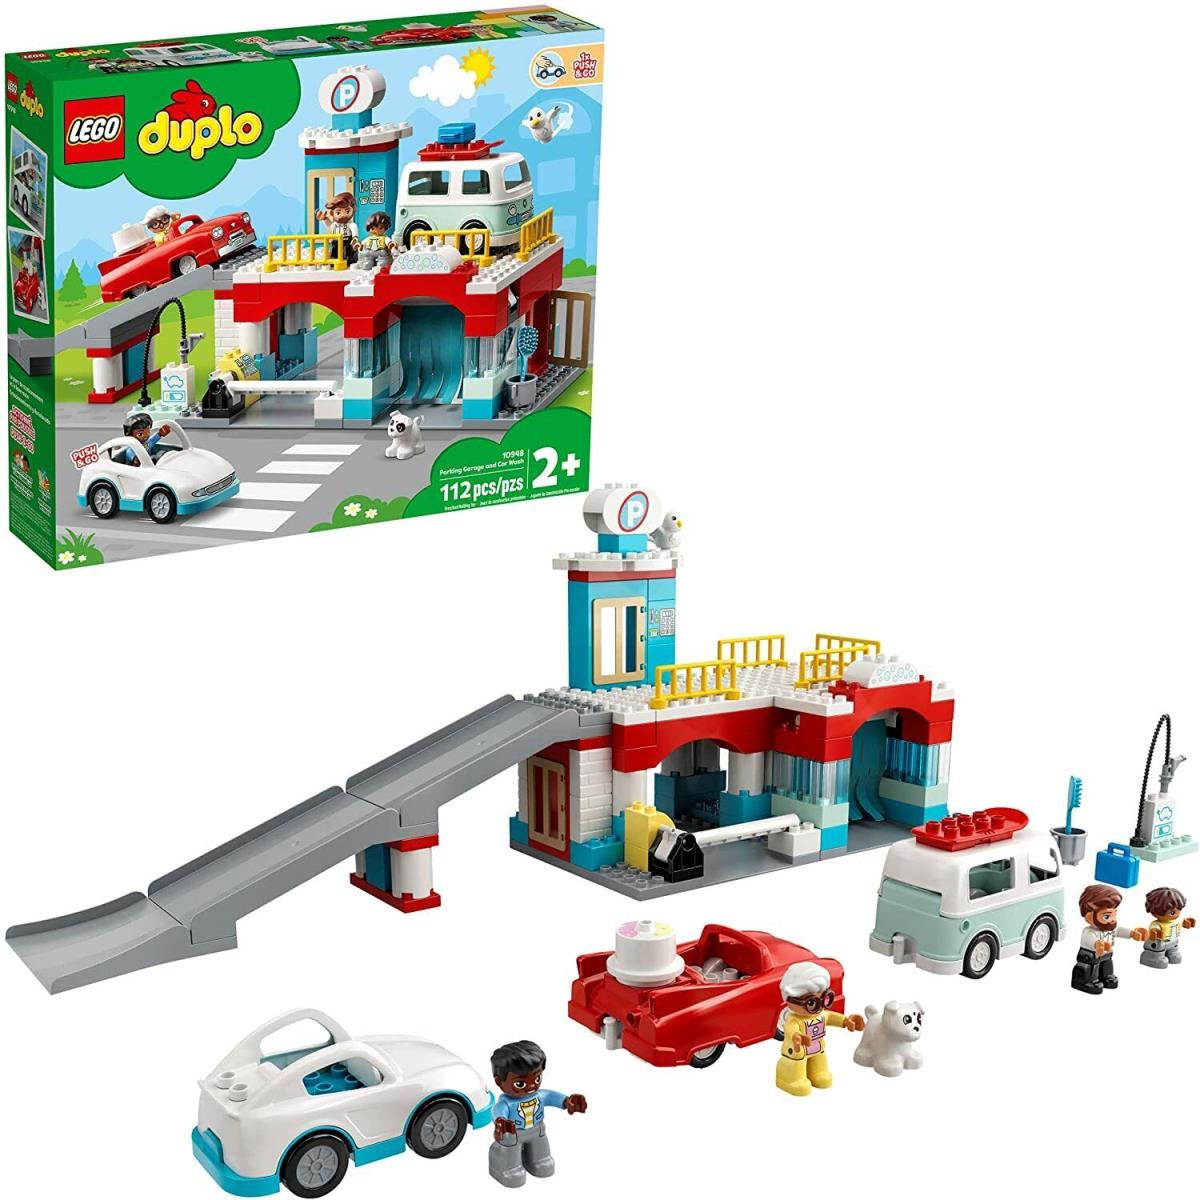 Lego Duplo 10948 2+ Parking Garage and Car Wash 112 Pieces